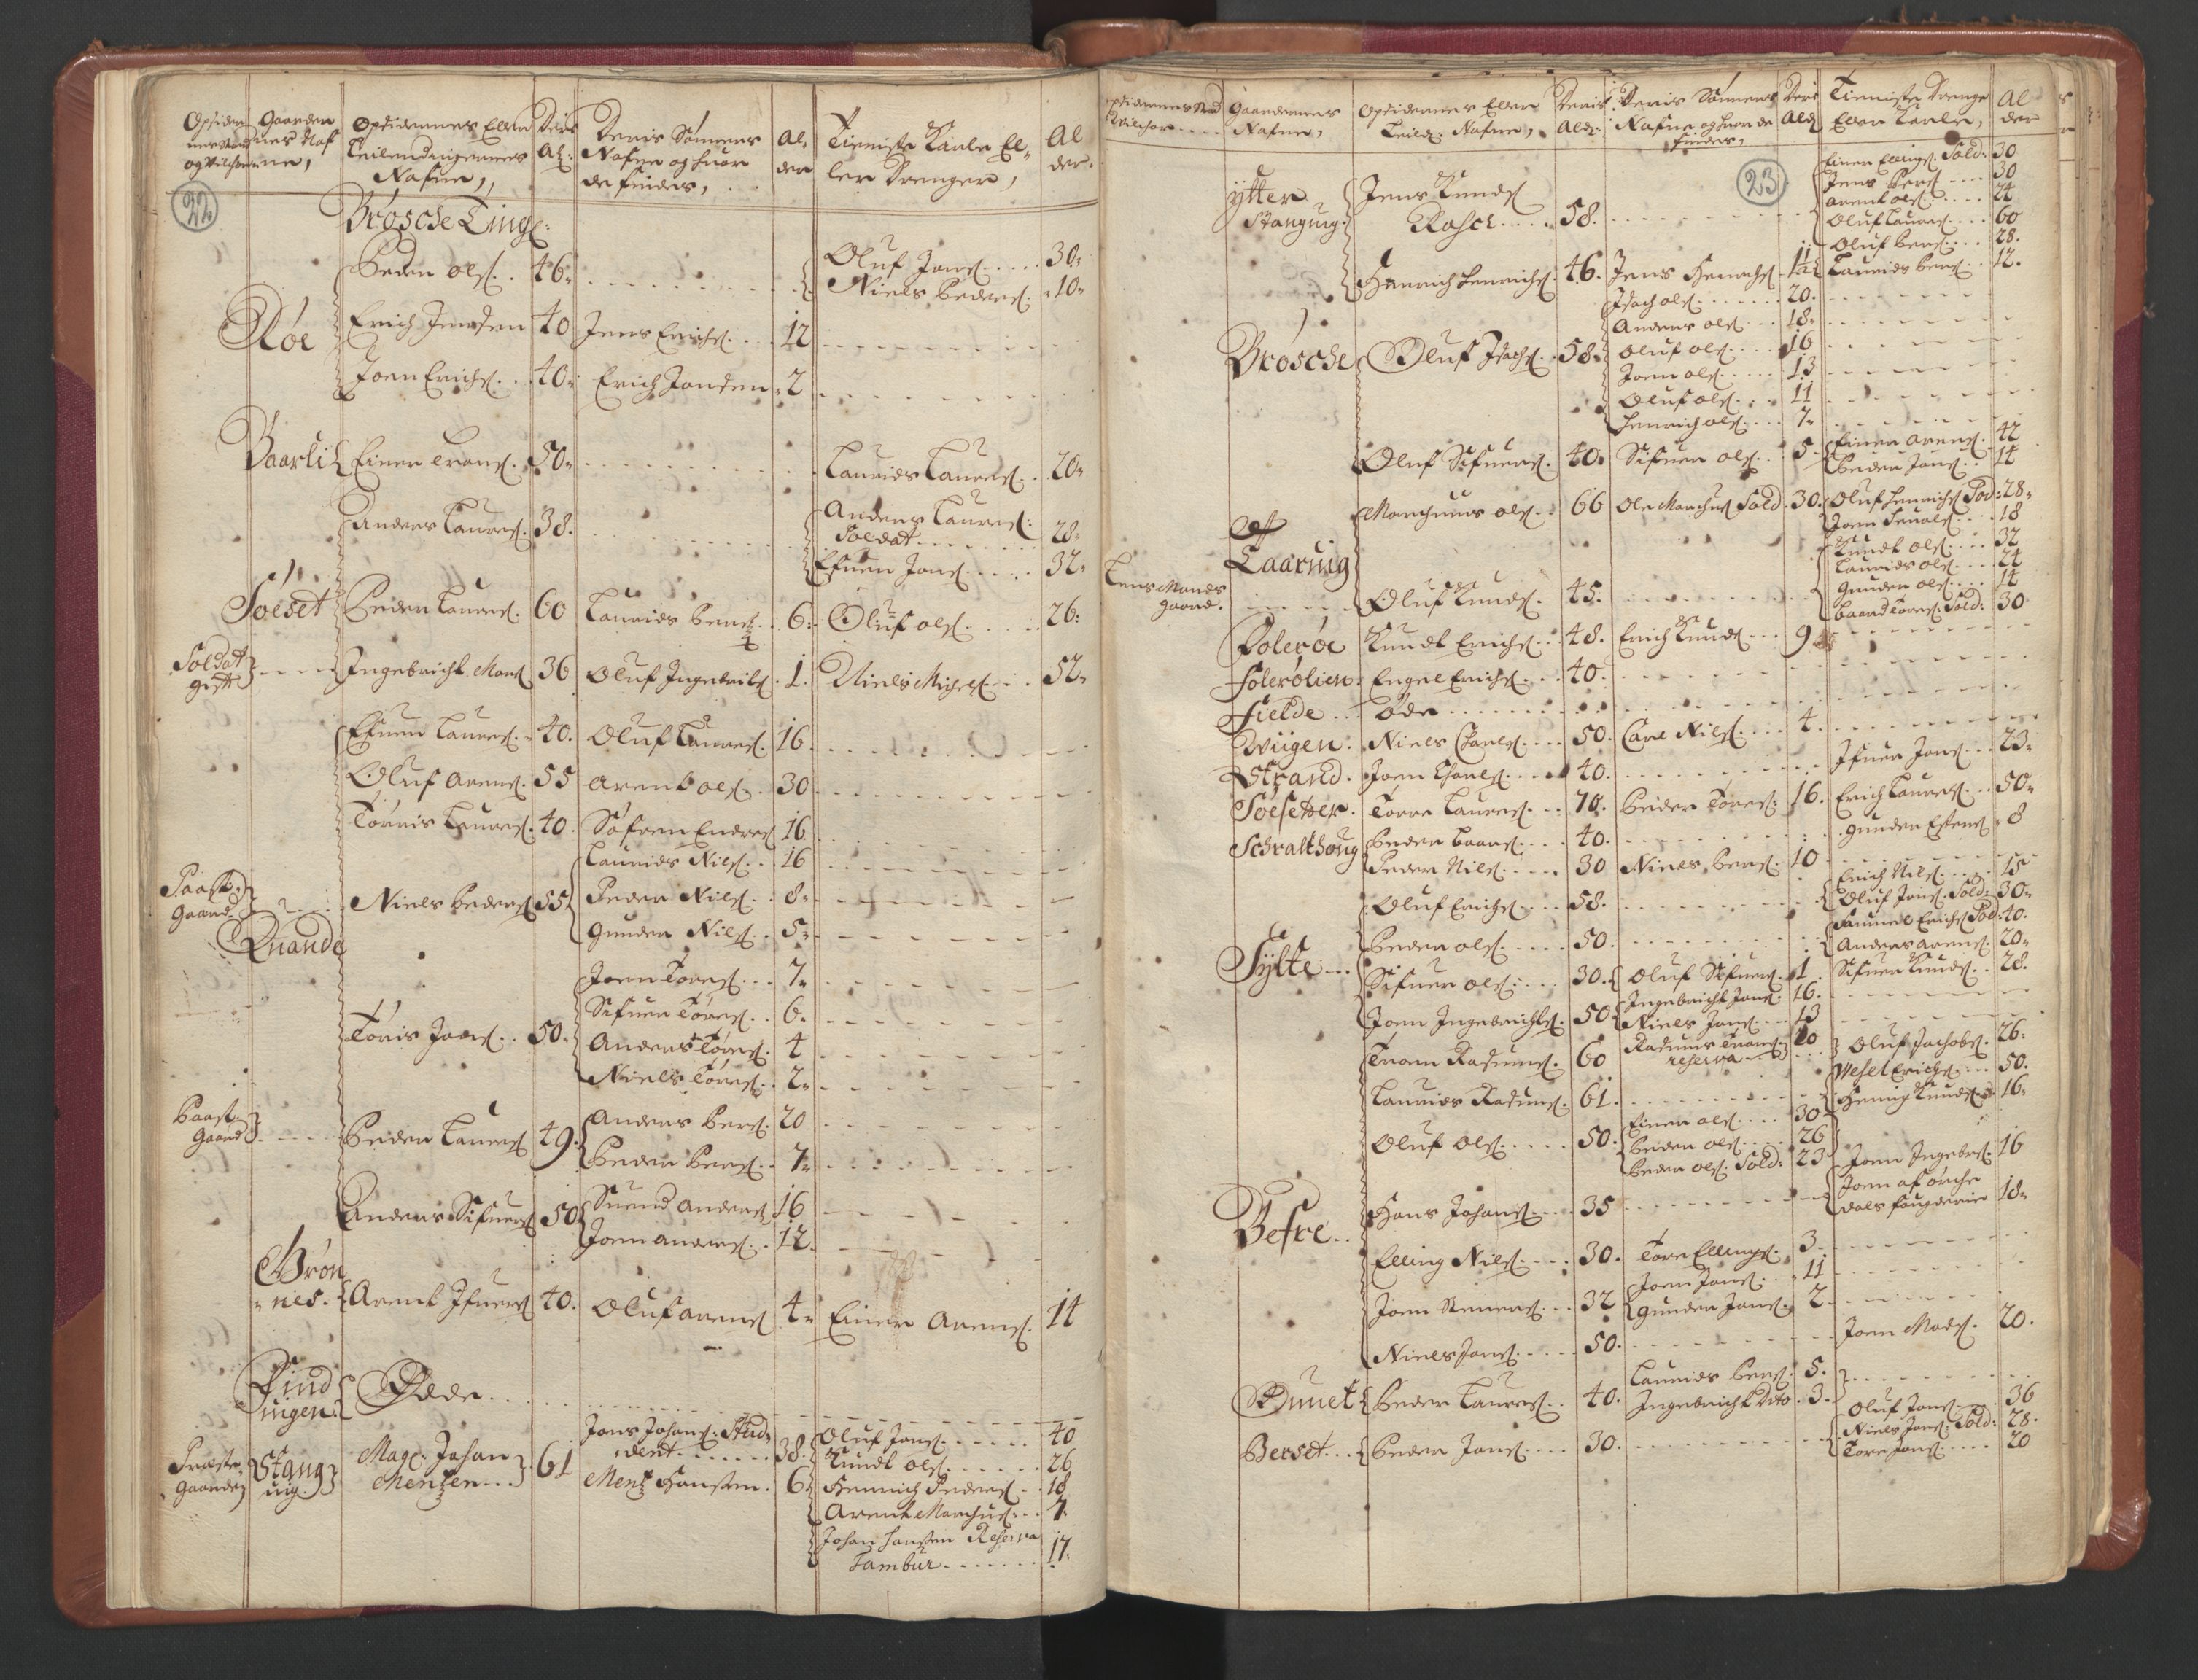 RA, Manntallet 1701, nr. 11: Nordmøre fogderi og Romsdal fogderi, 1701, s. 22-23